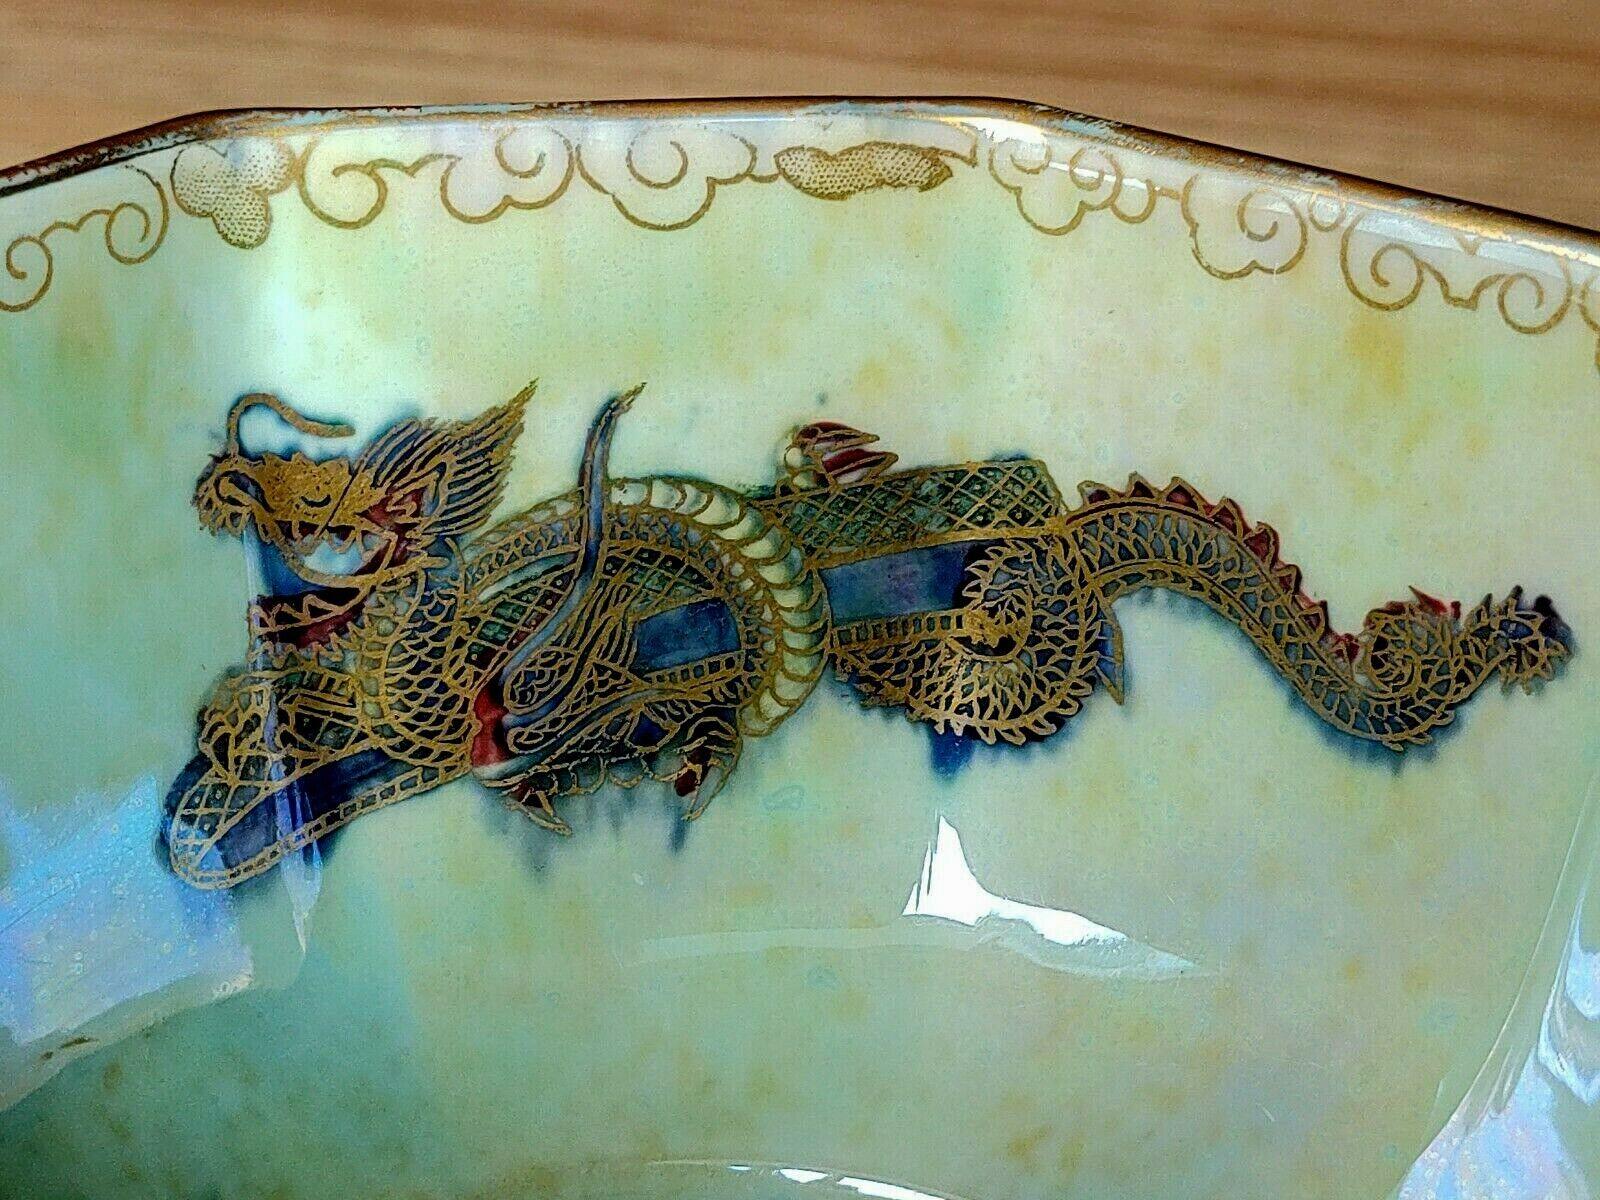 c.1920s Wedgwood Fairyland Lustre Gilt Celestial Dragons Octagonal Bowl - Tommy's Treasure